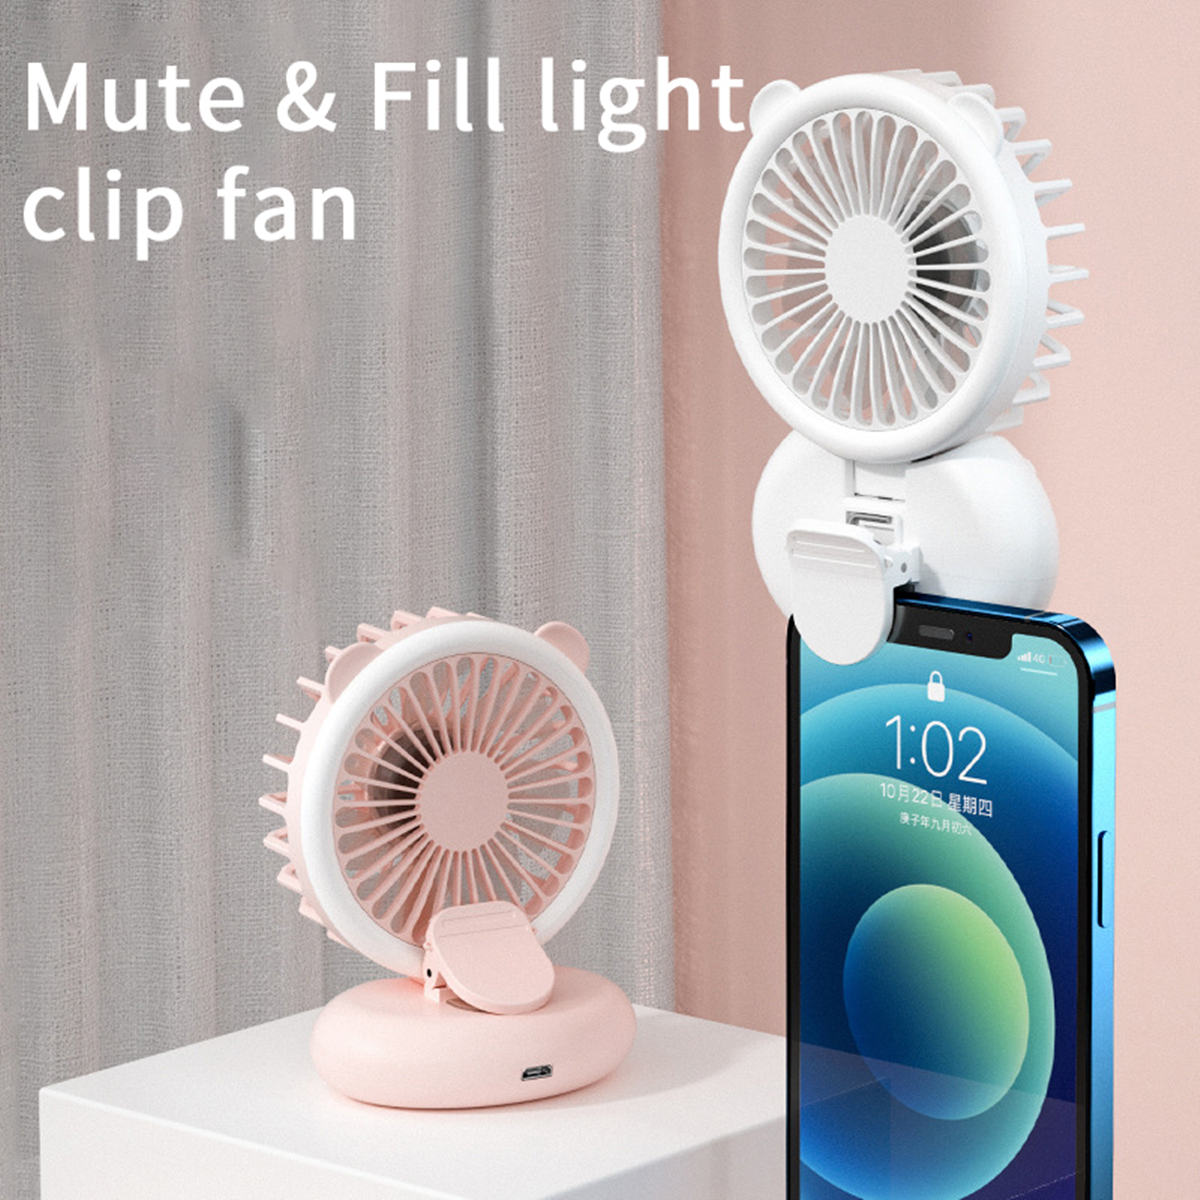 fill light clip fan